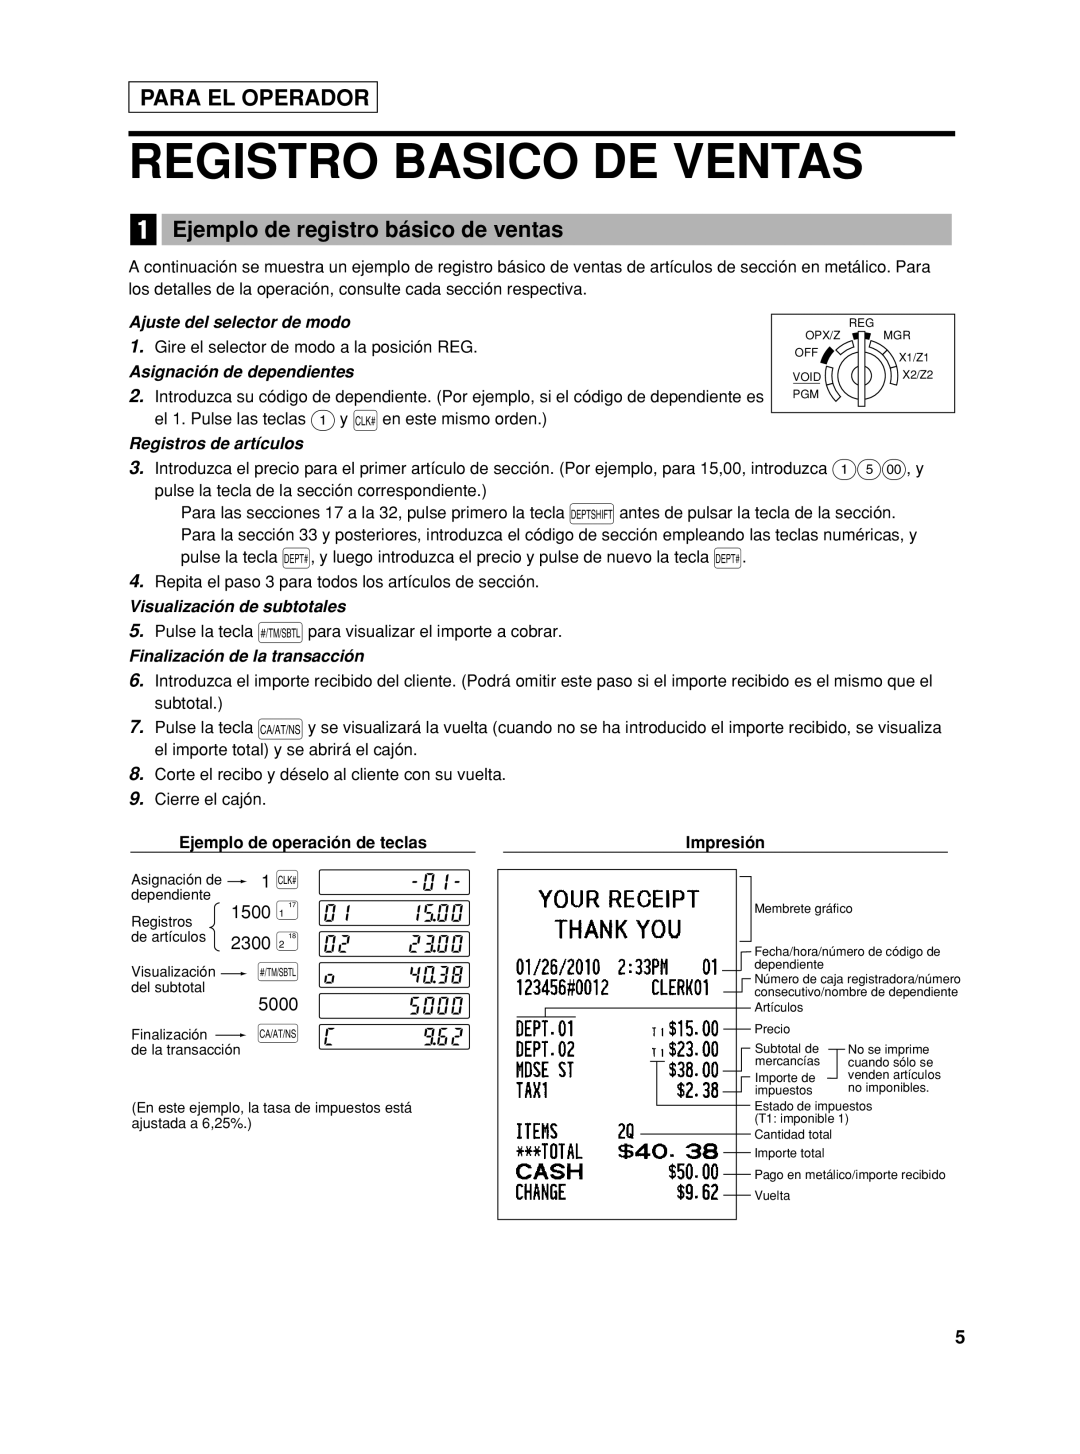 Sharp TINSZ2600RCZZ Registro Basico De Ventas, Para El Operador, Ejemplo de registro básico de ventas, Impresión, 1500 